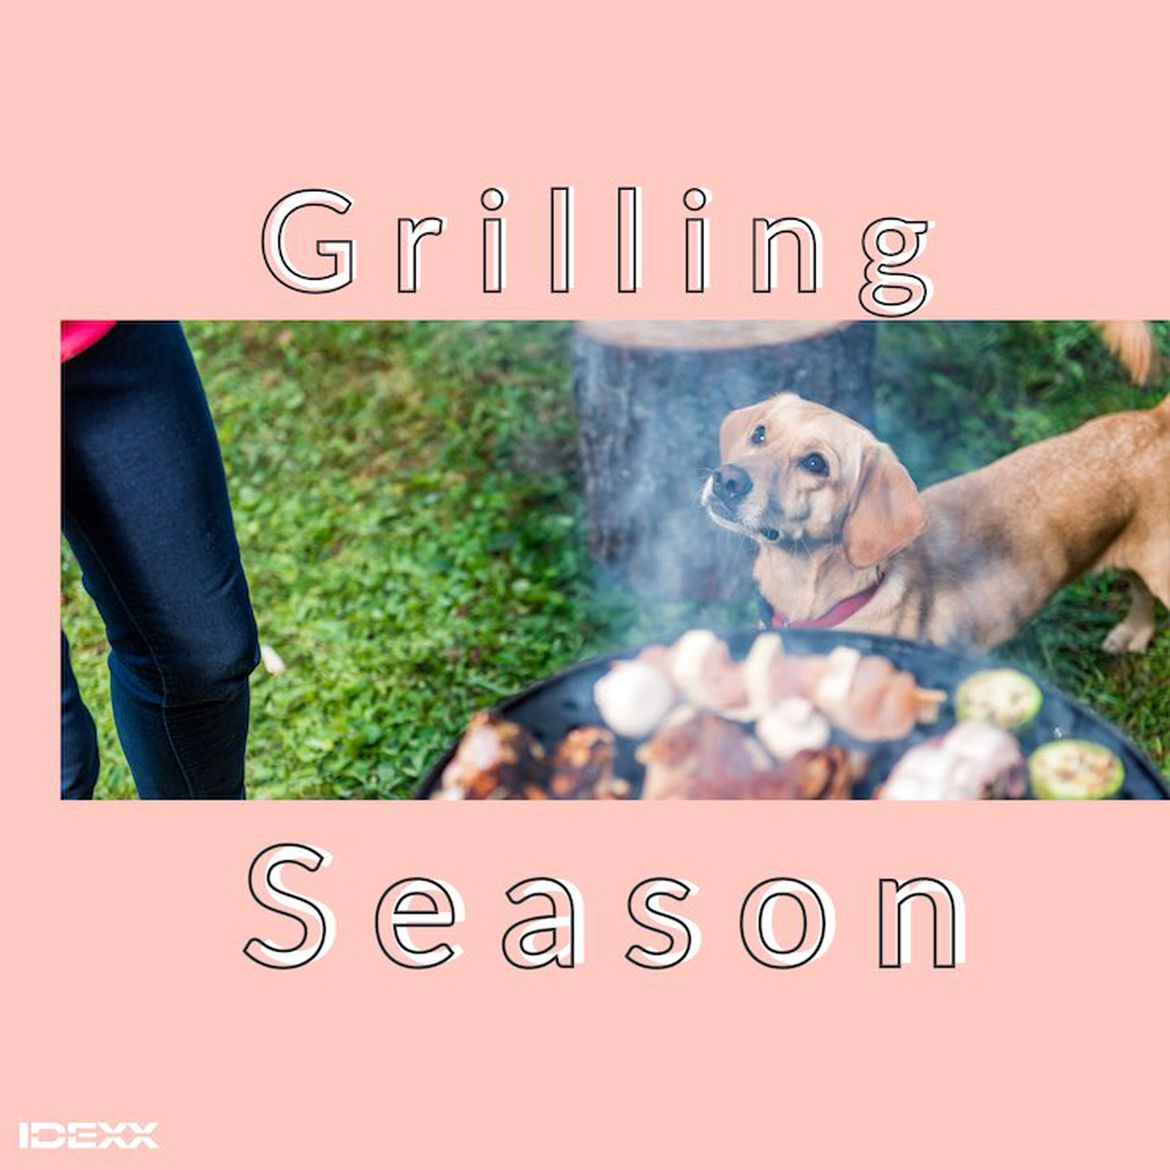 Grilling season warning for dogs social media post